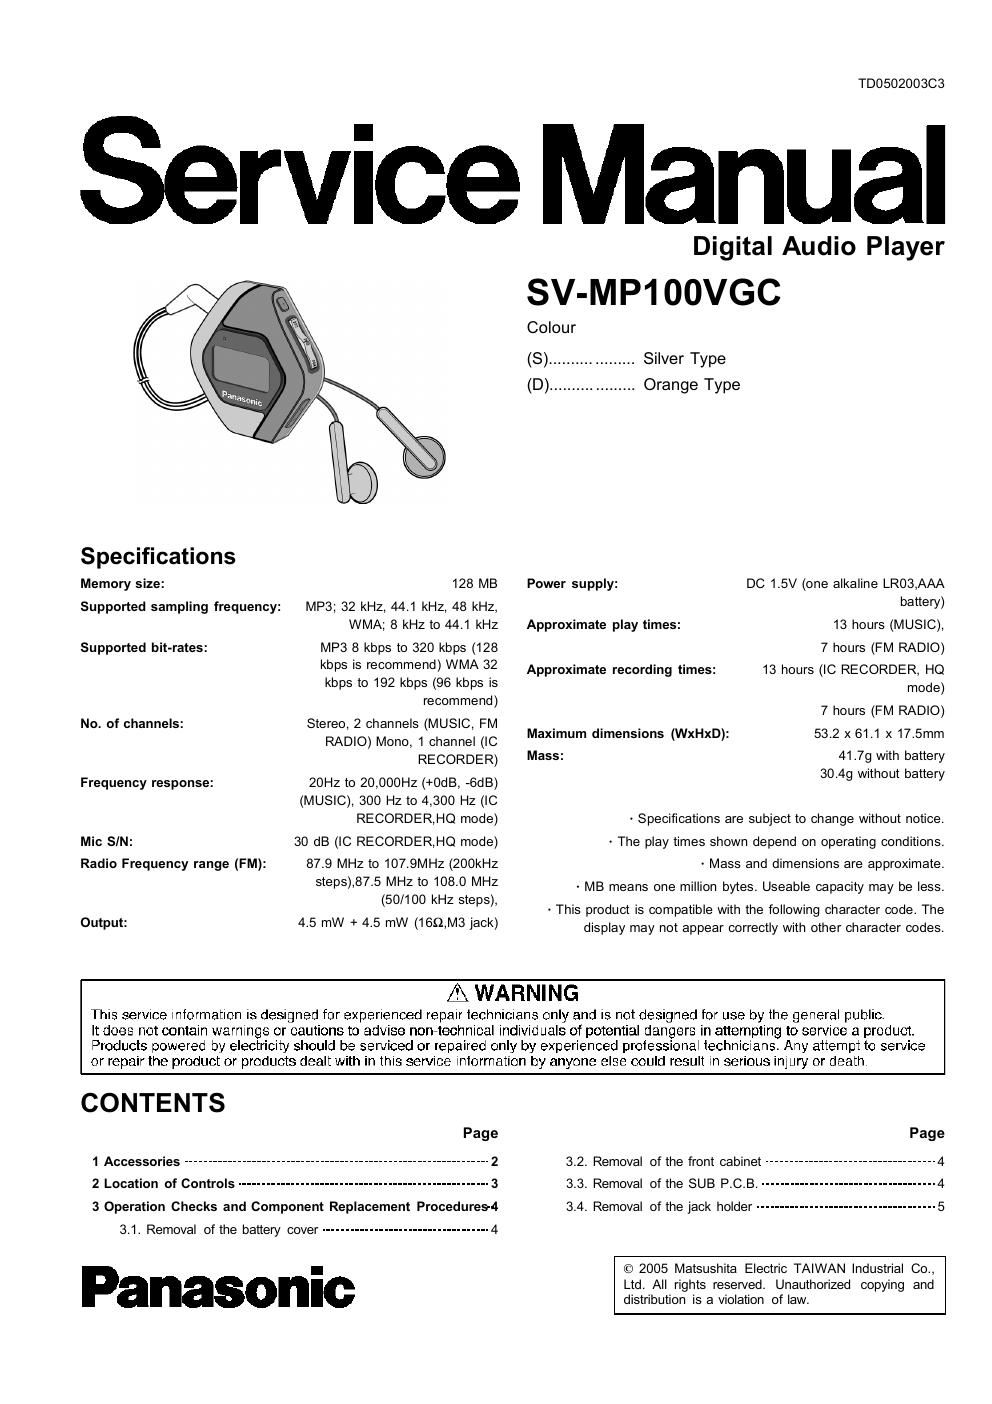 panasonic sv mp 100 vgc service manual